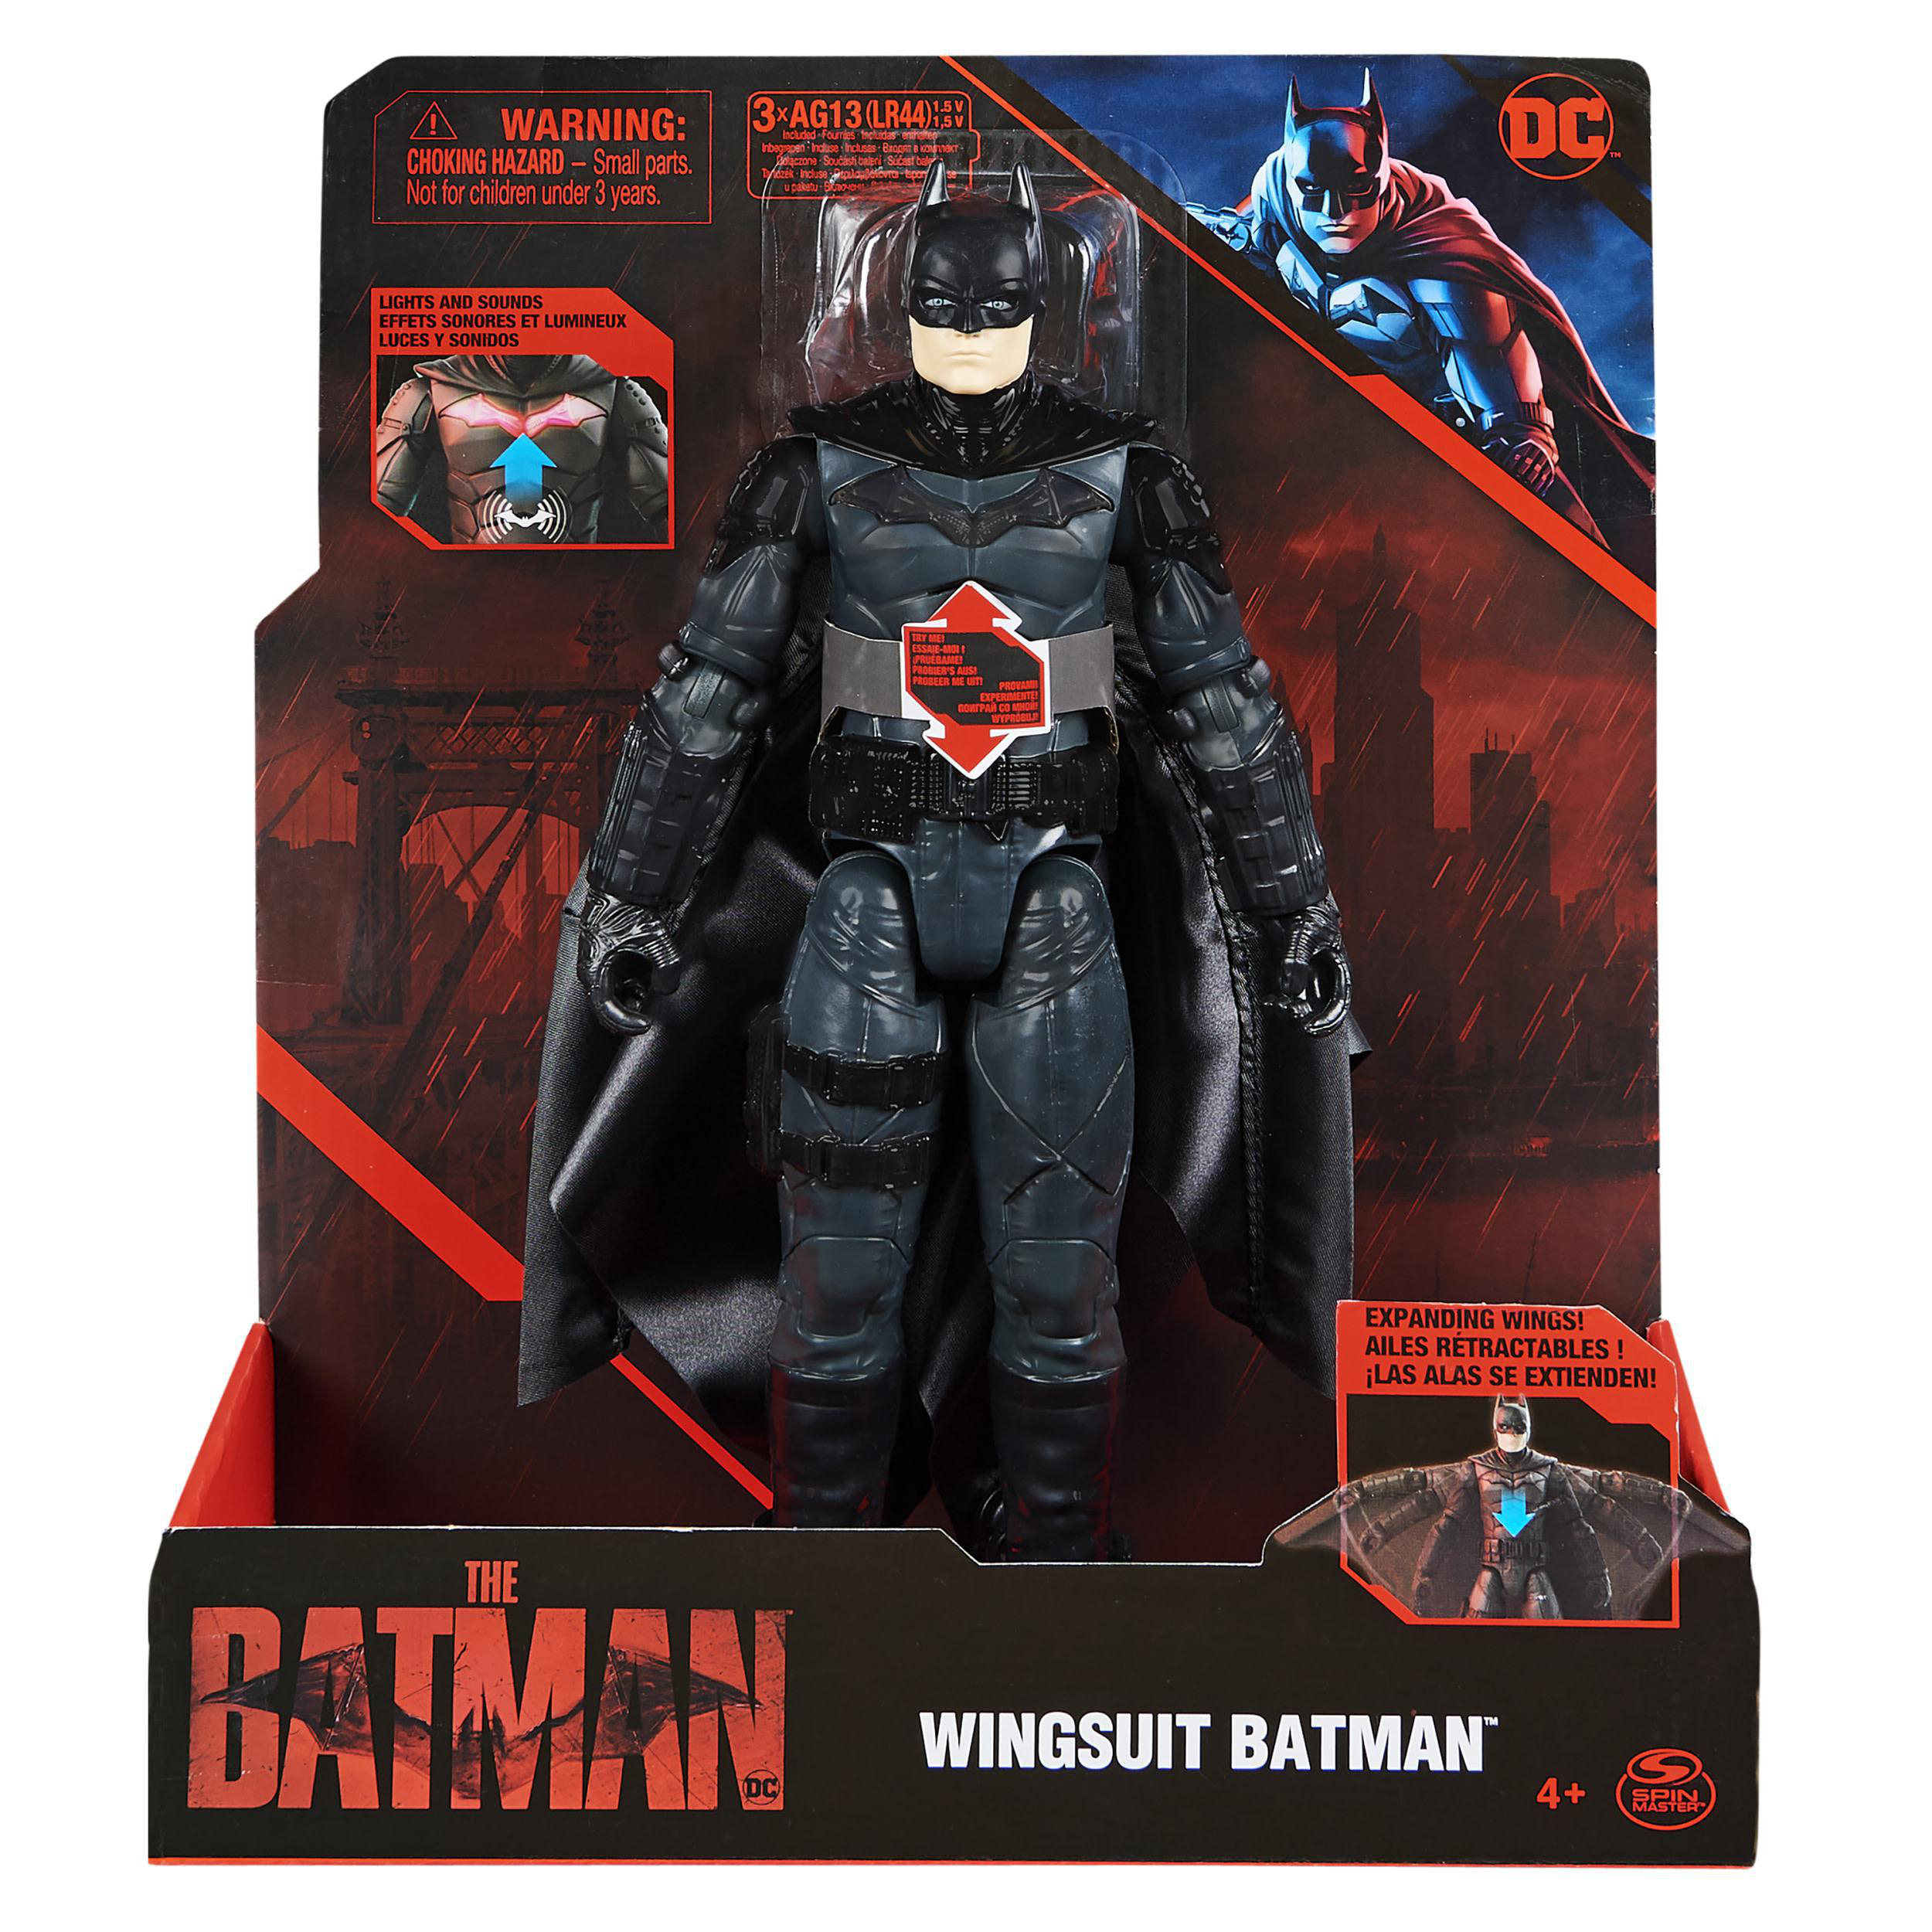 SPIN MASTER Actionfigur Batman Batman 30cm BAT Movie Schwarz - Feature